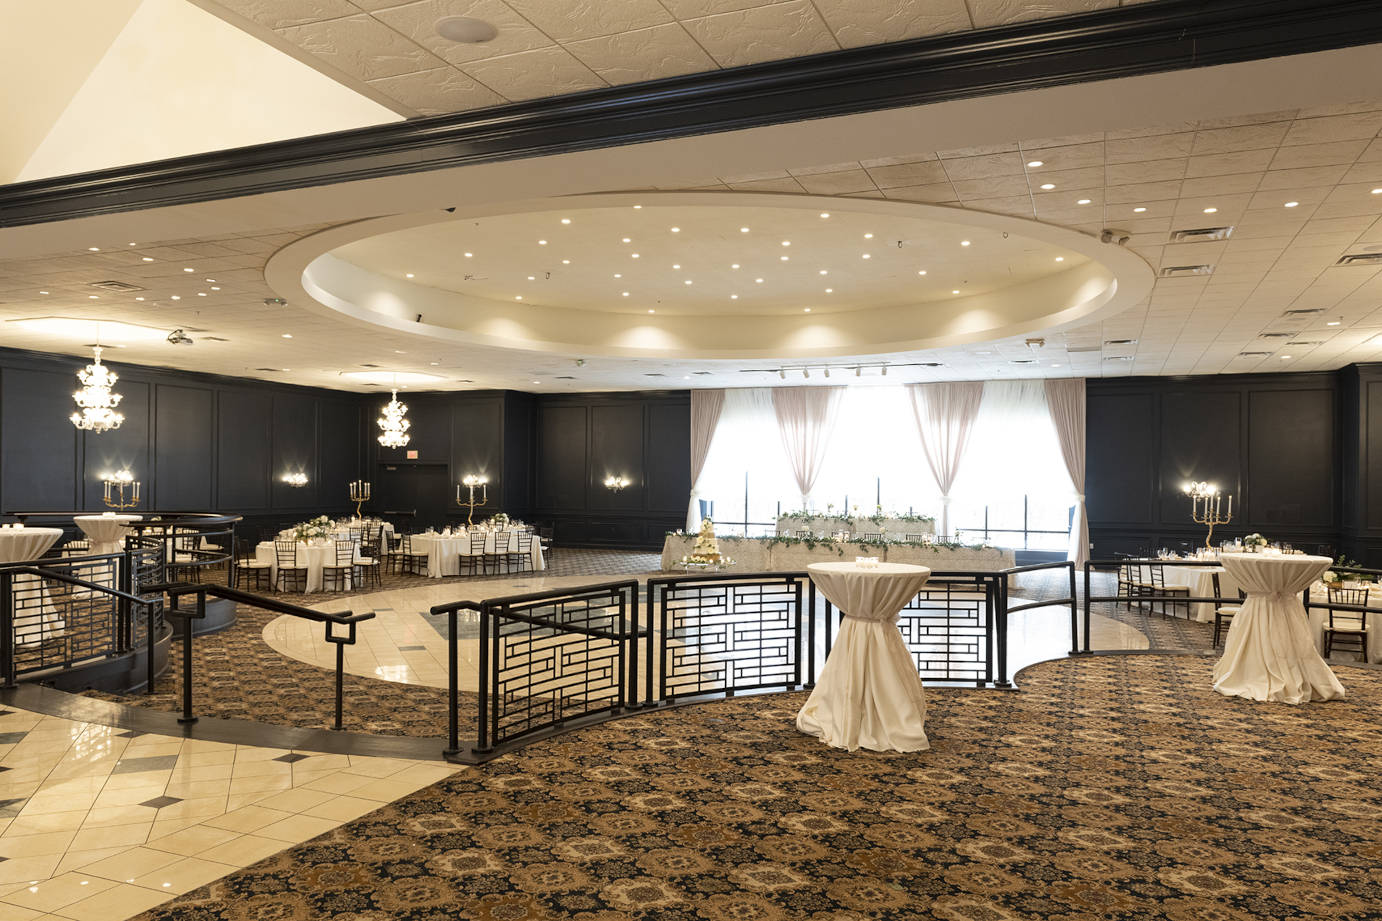 Banquet and Event center interior